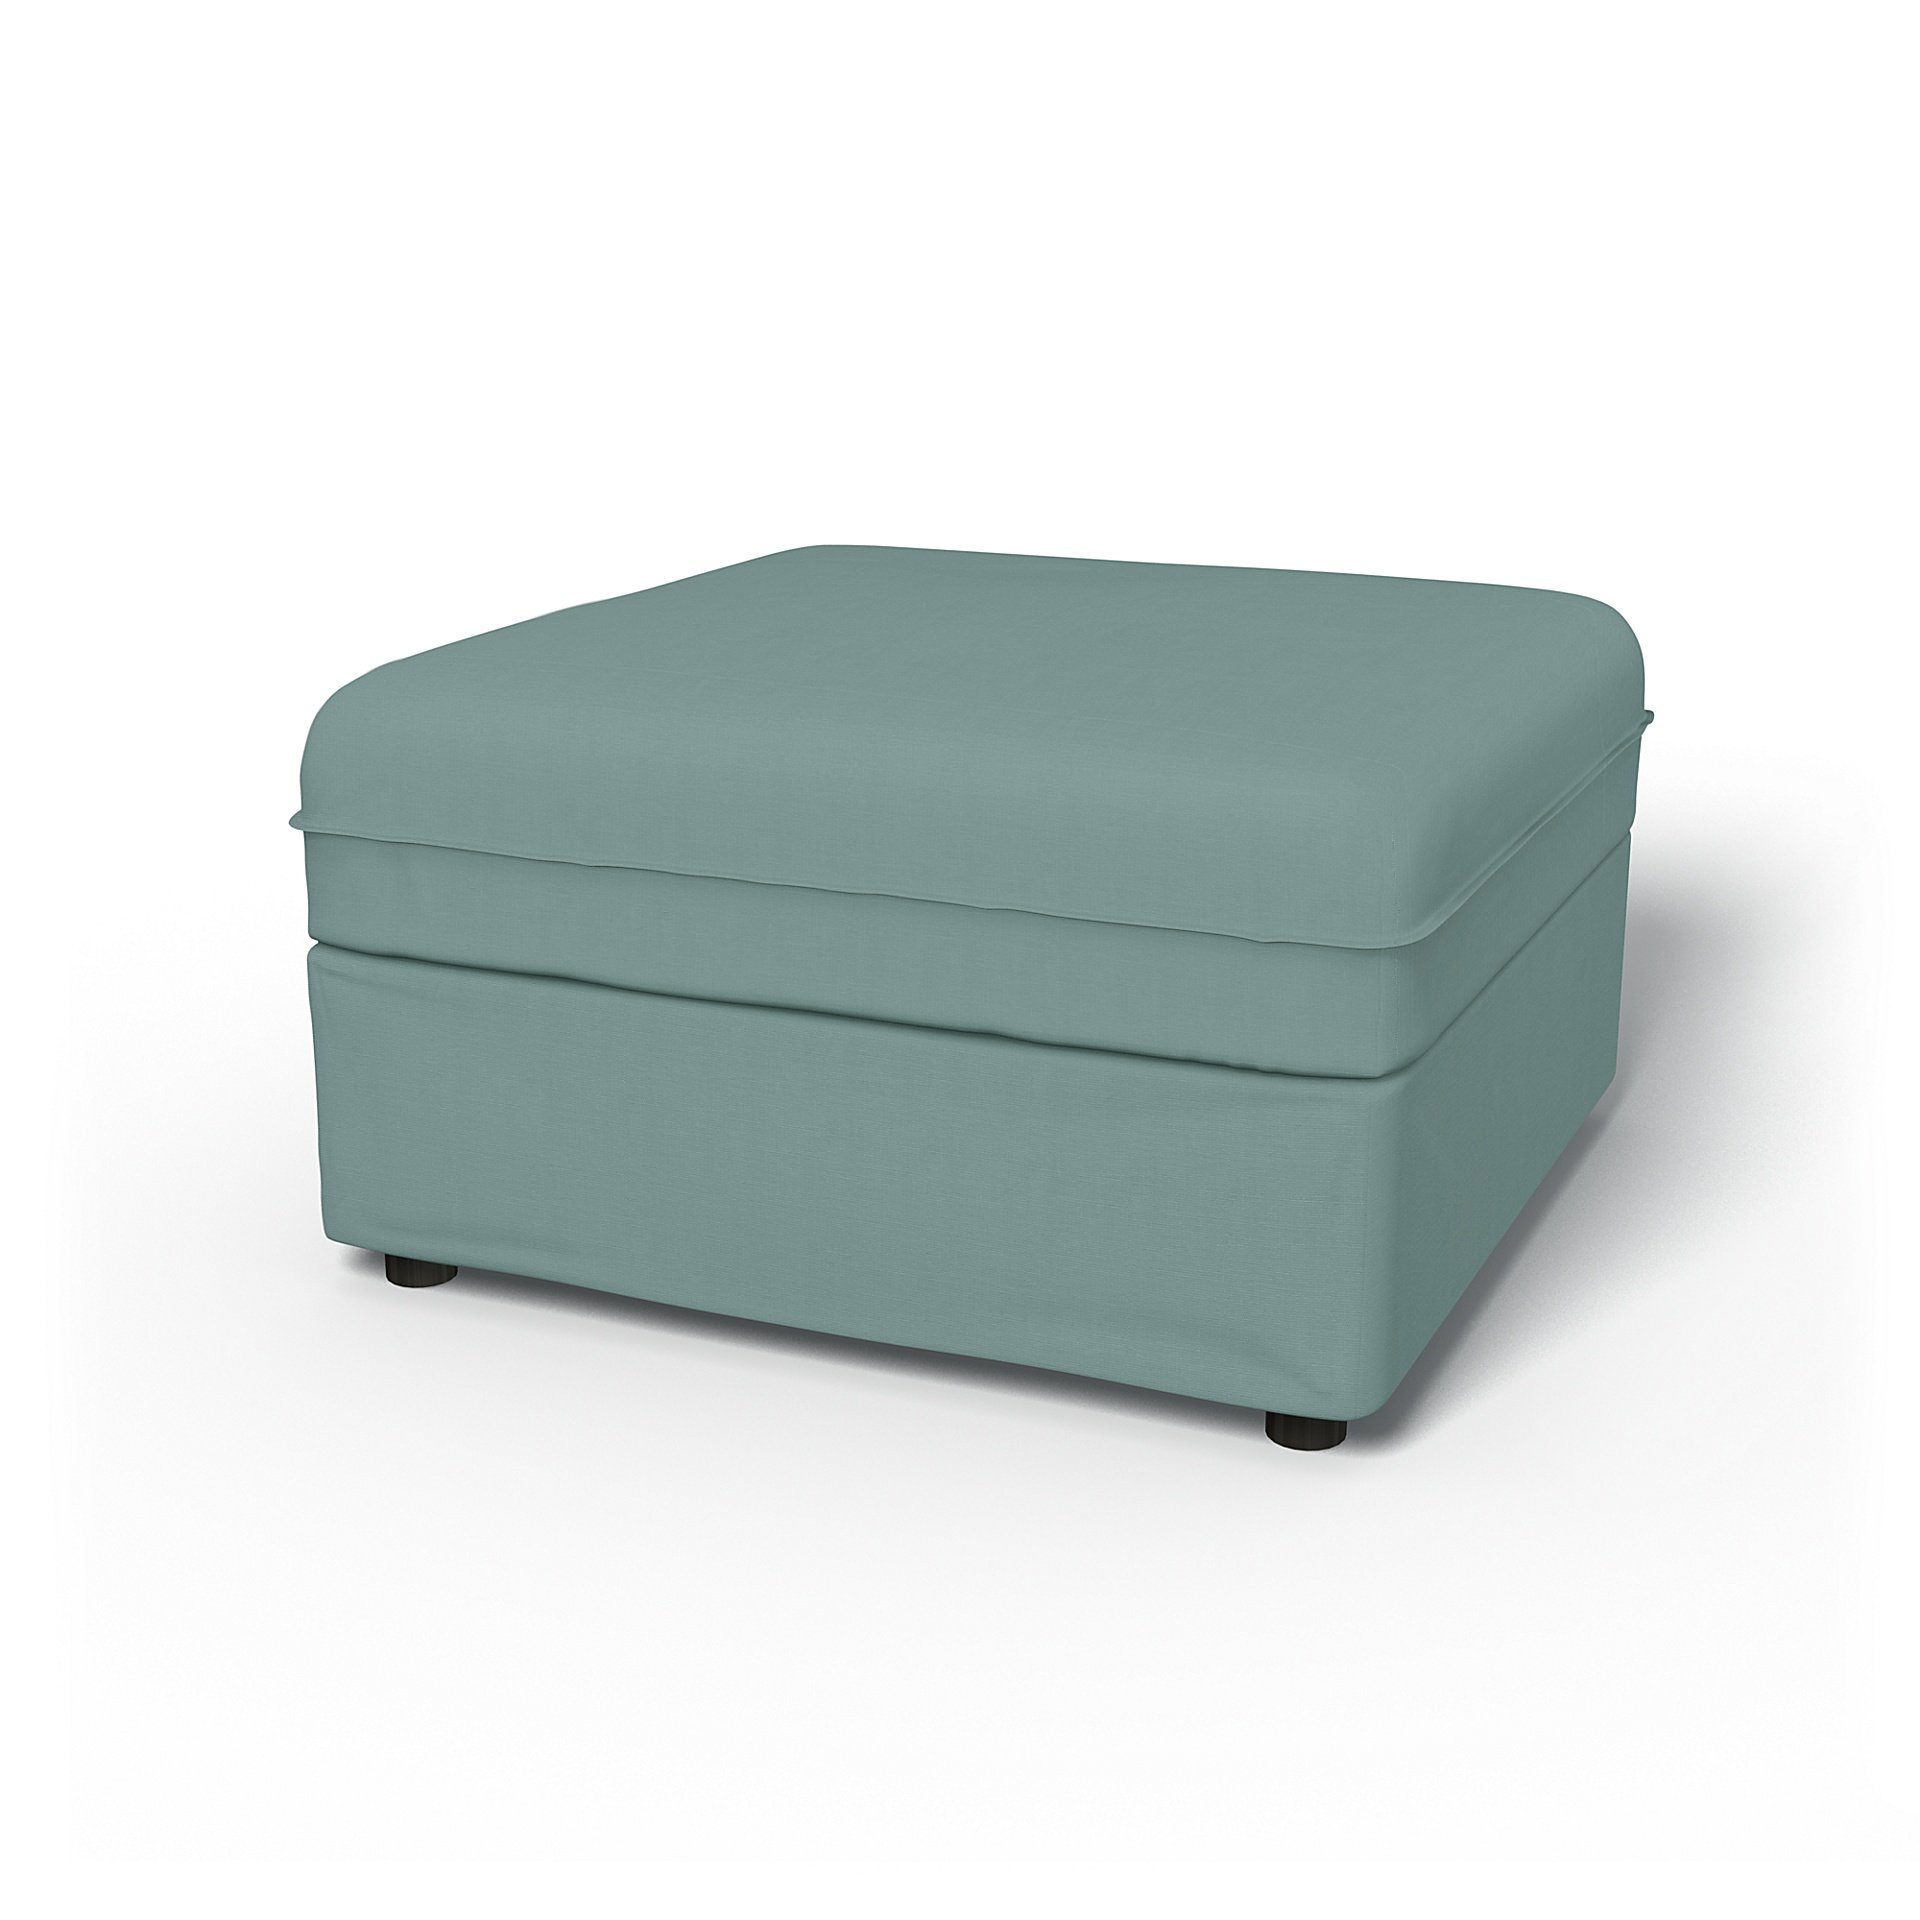 IKEA - Vallentuna Seat Module with Storage Cover 80x80cm 32x32in, Mineral Blue, Cotton - Bemz